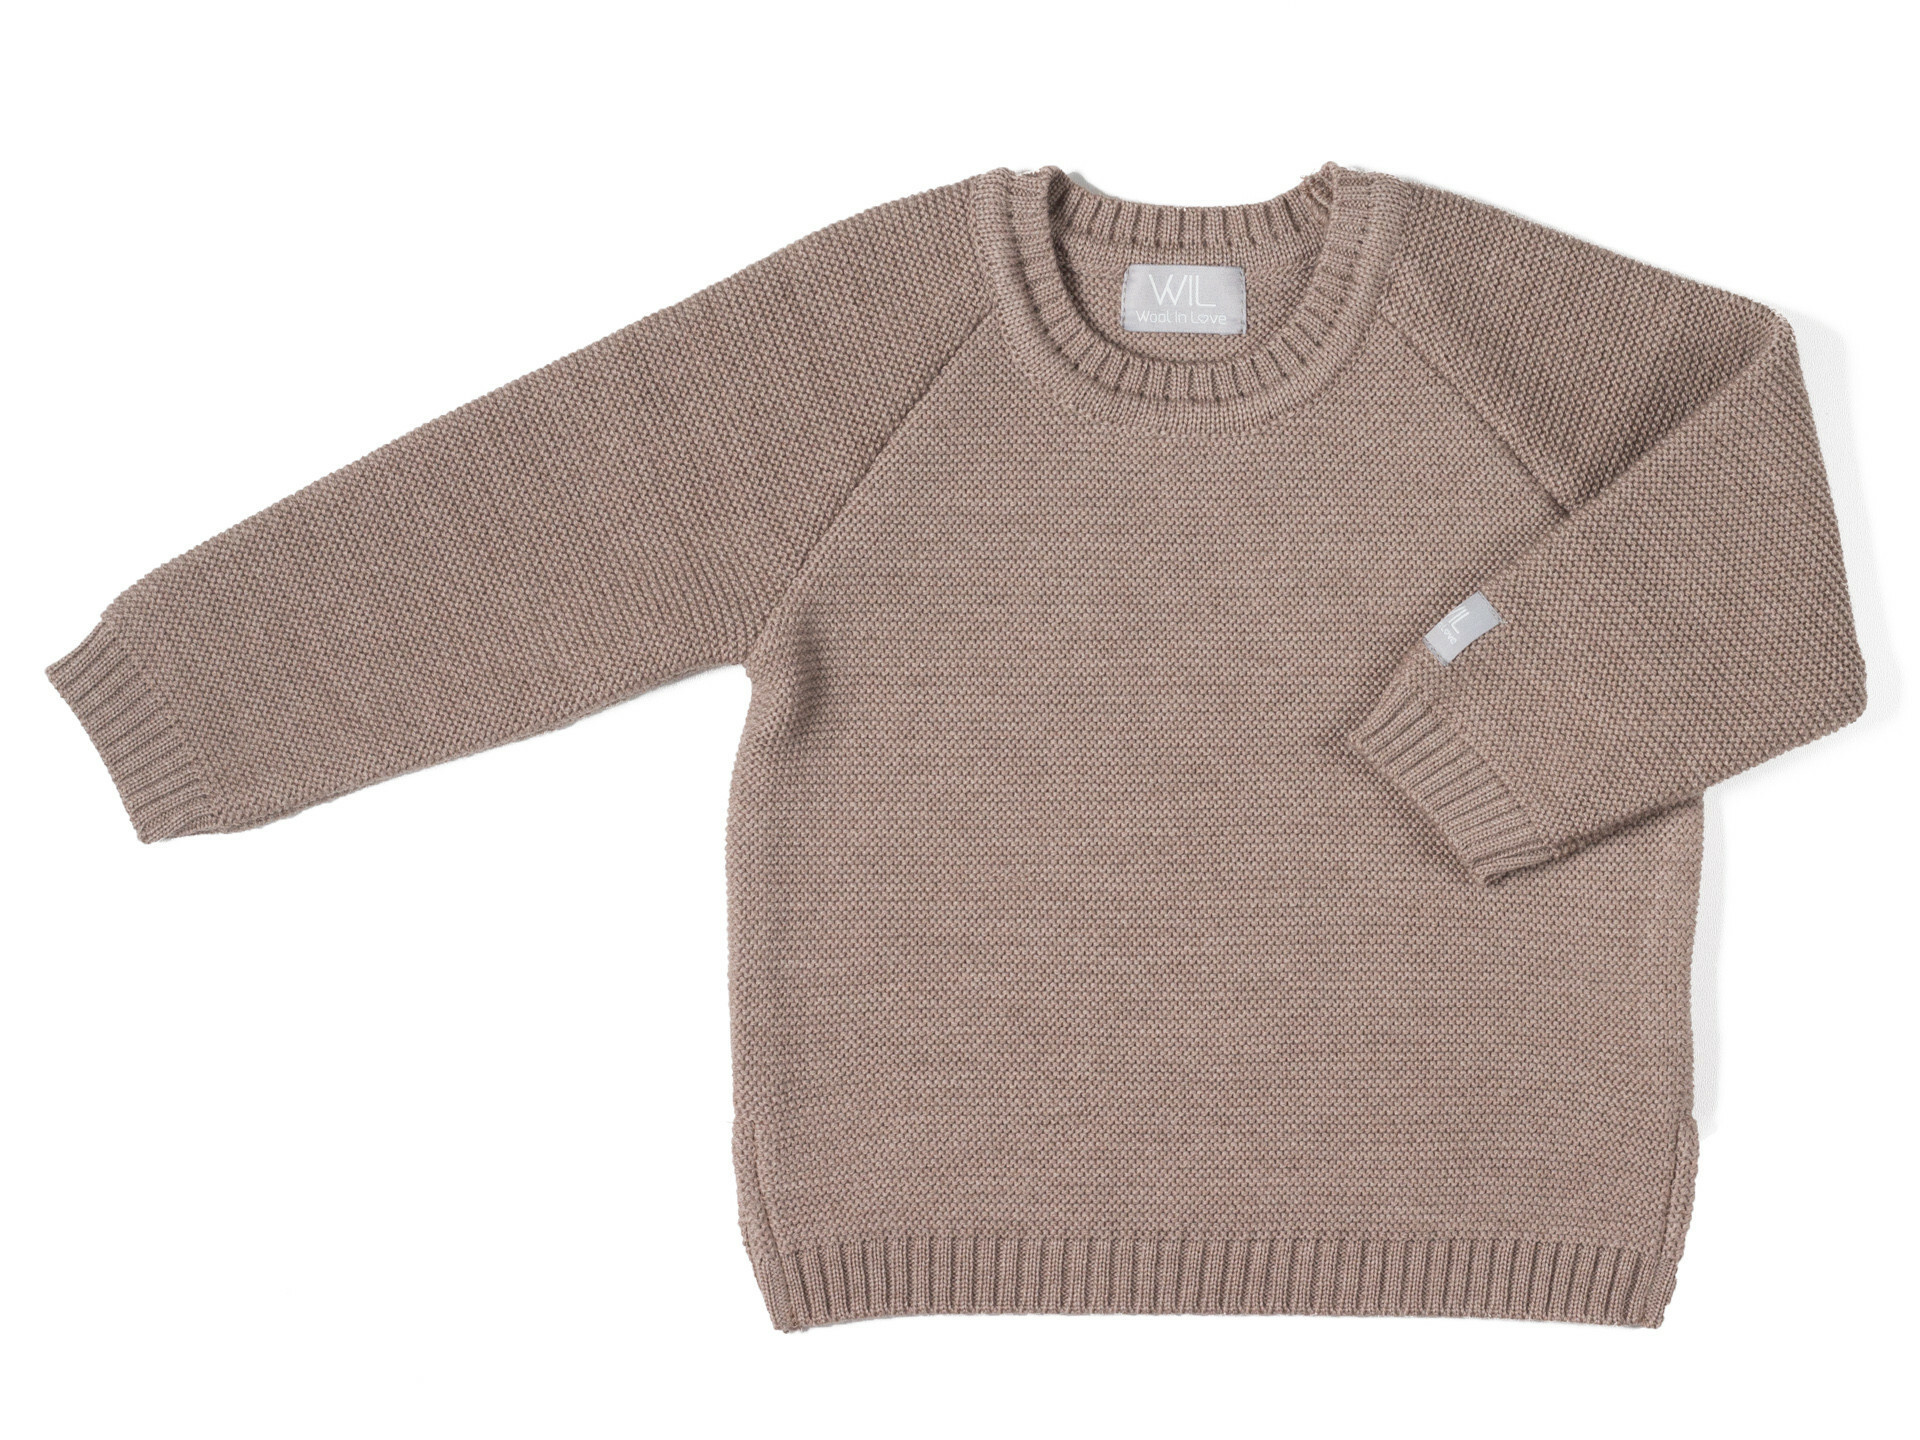 Merino sweater AMITY - Coffee beige - 68